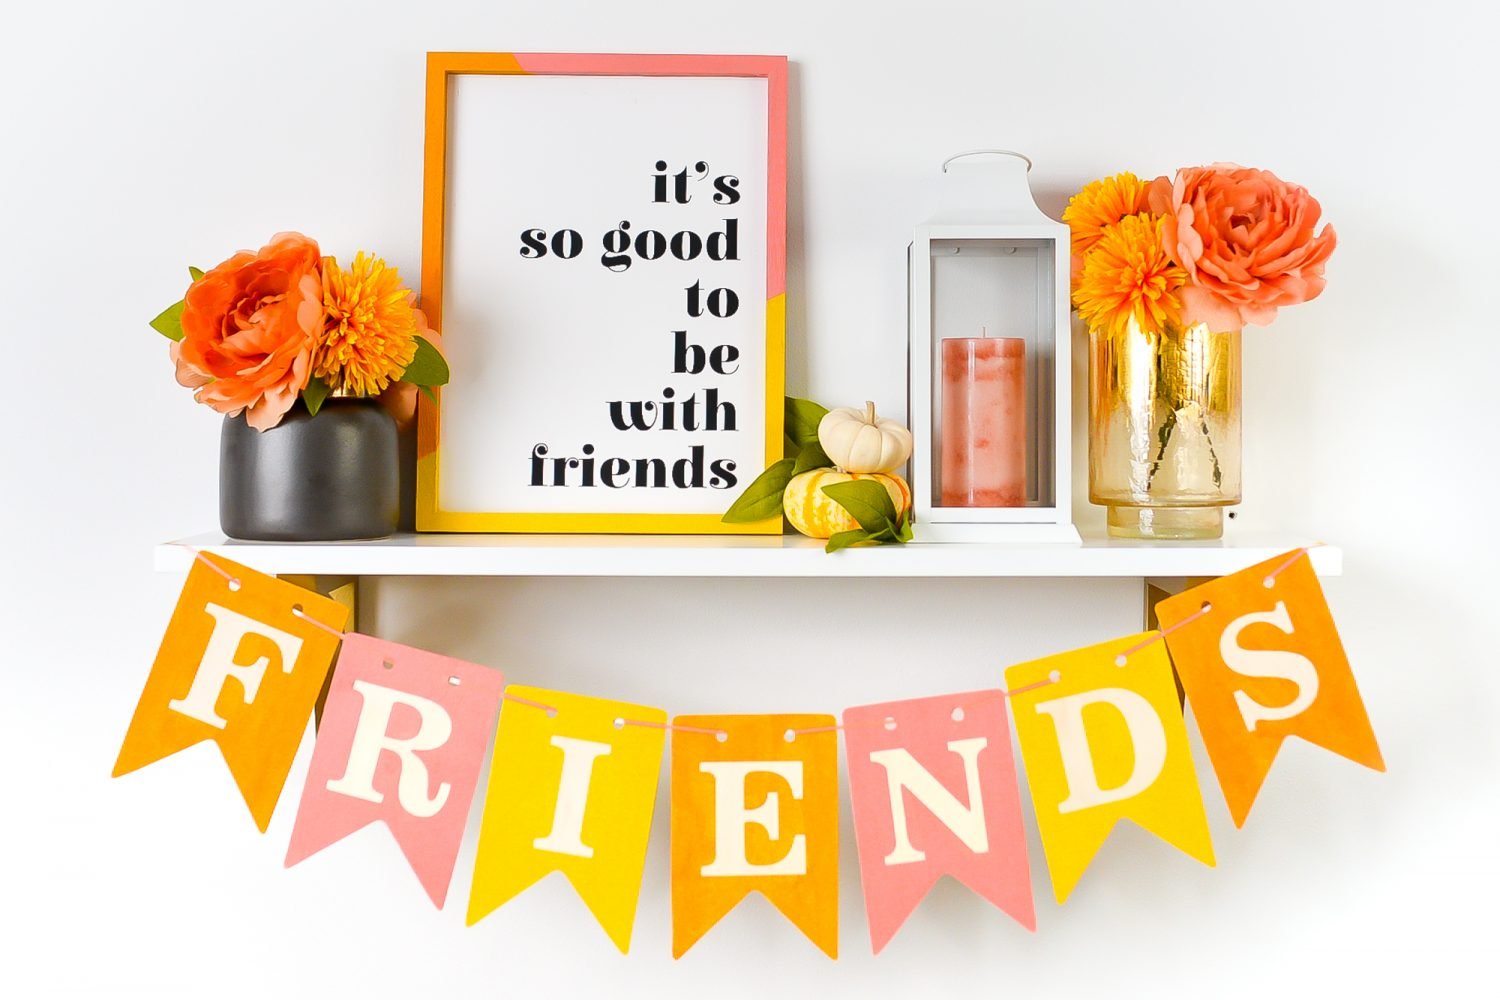 Friendsgiving decorations: friends sign, friends banner, faux flowers, candle in lantern, pumpkins